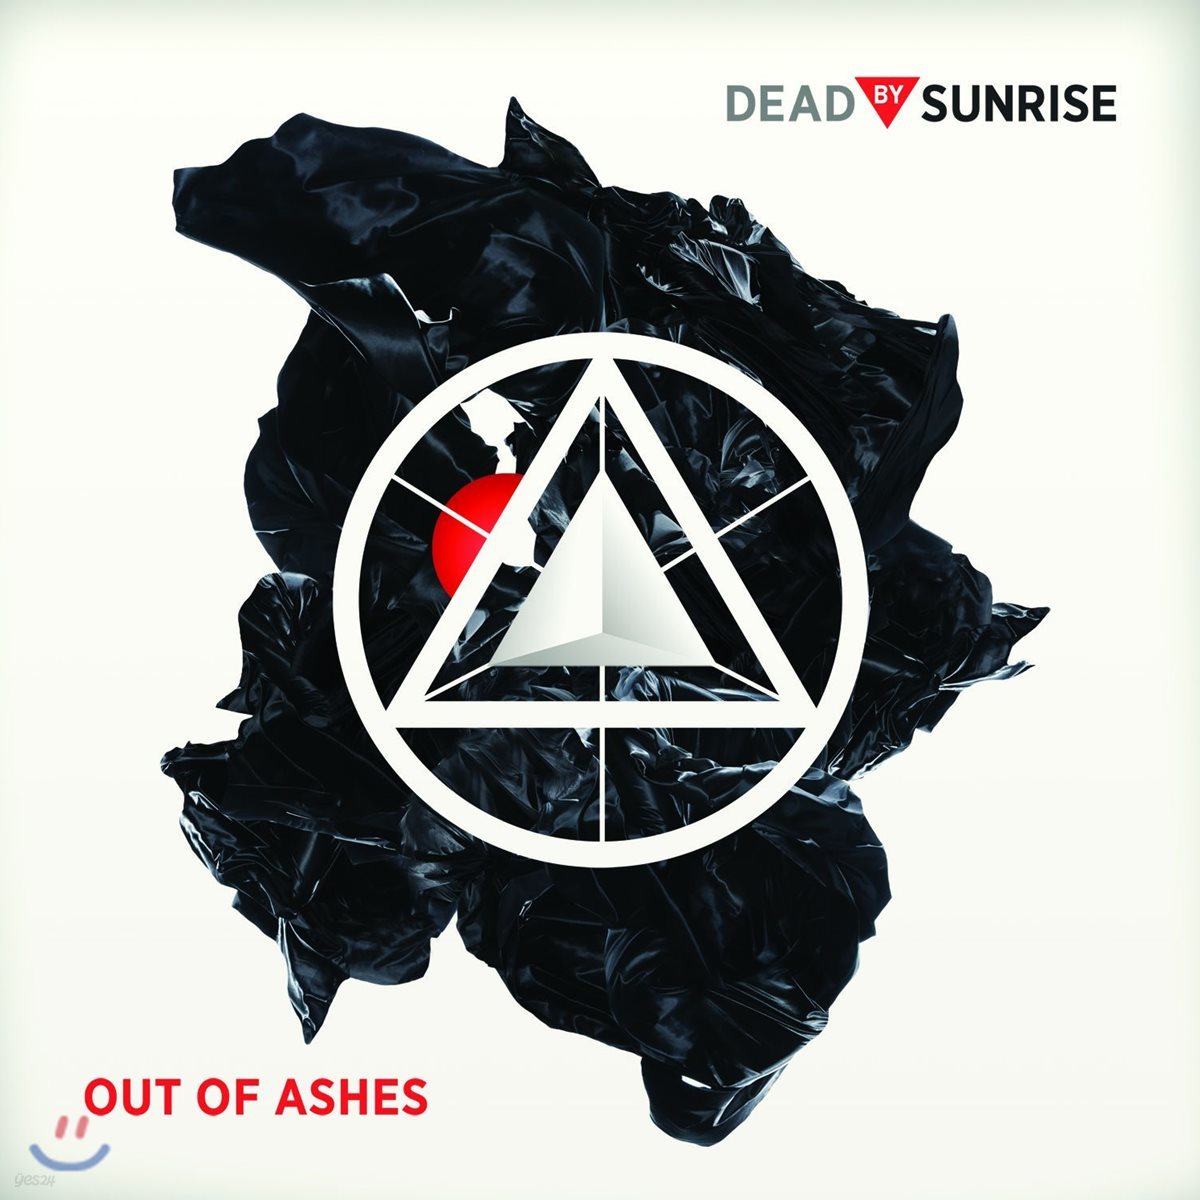 Dead By Sunrise - Out Of Ashes 린킨 파크 보컬 `체스터 베닝턴`의 프로젝트 밴드